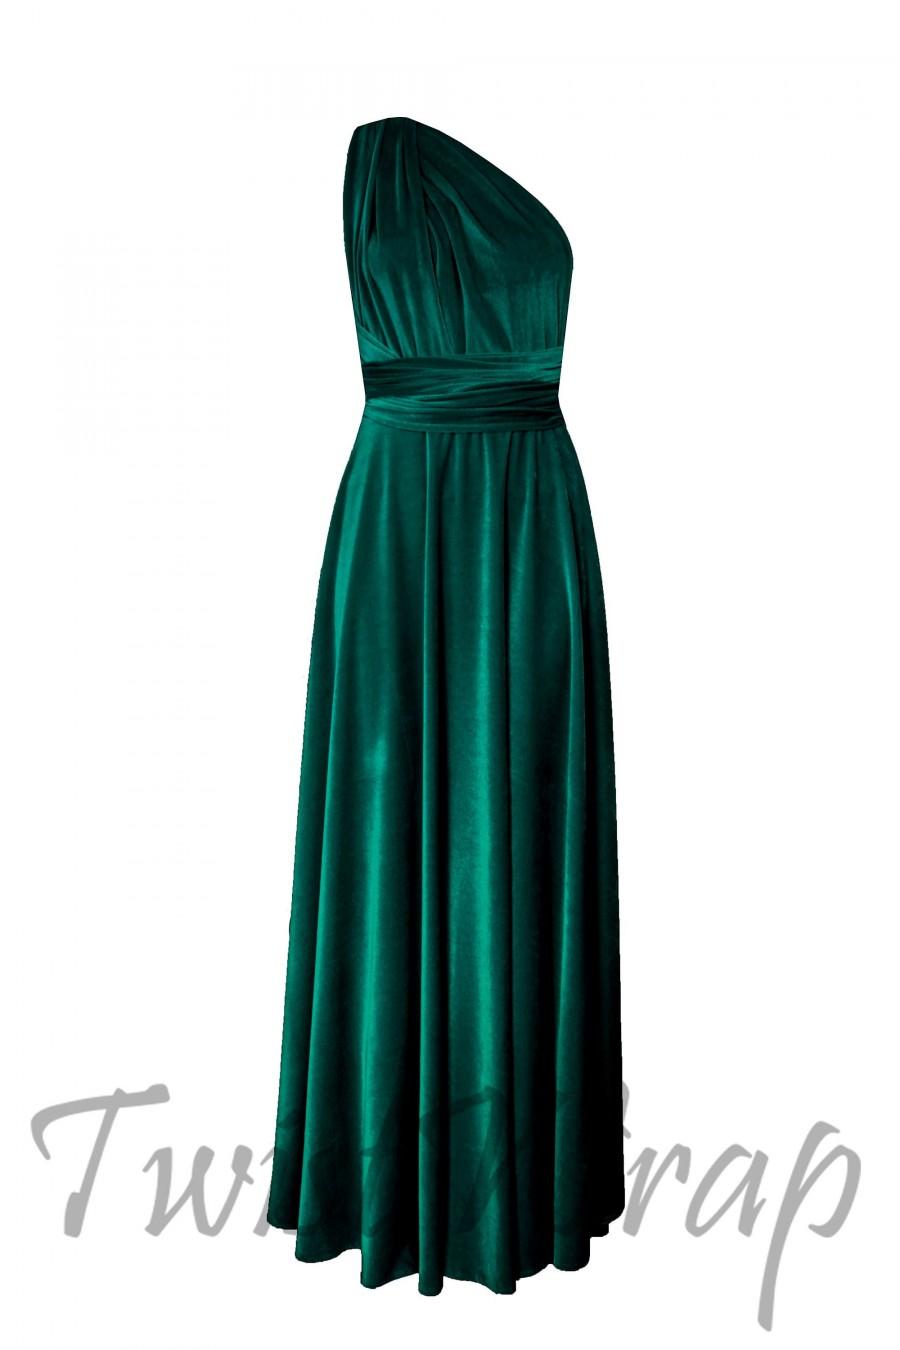 Wedding - Velvet Dress Dark Green Infinity Dress Bridesmaids Dress Long Convertible Dress Formal Maternity Dress Plus Size Prom Dress